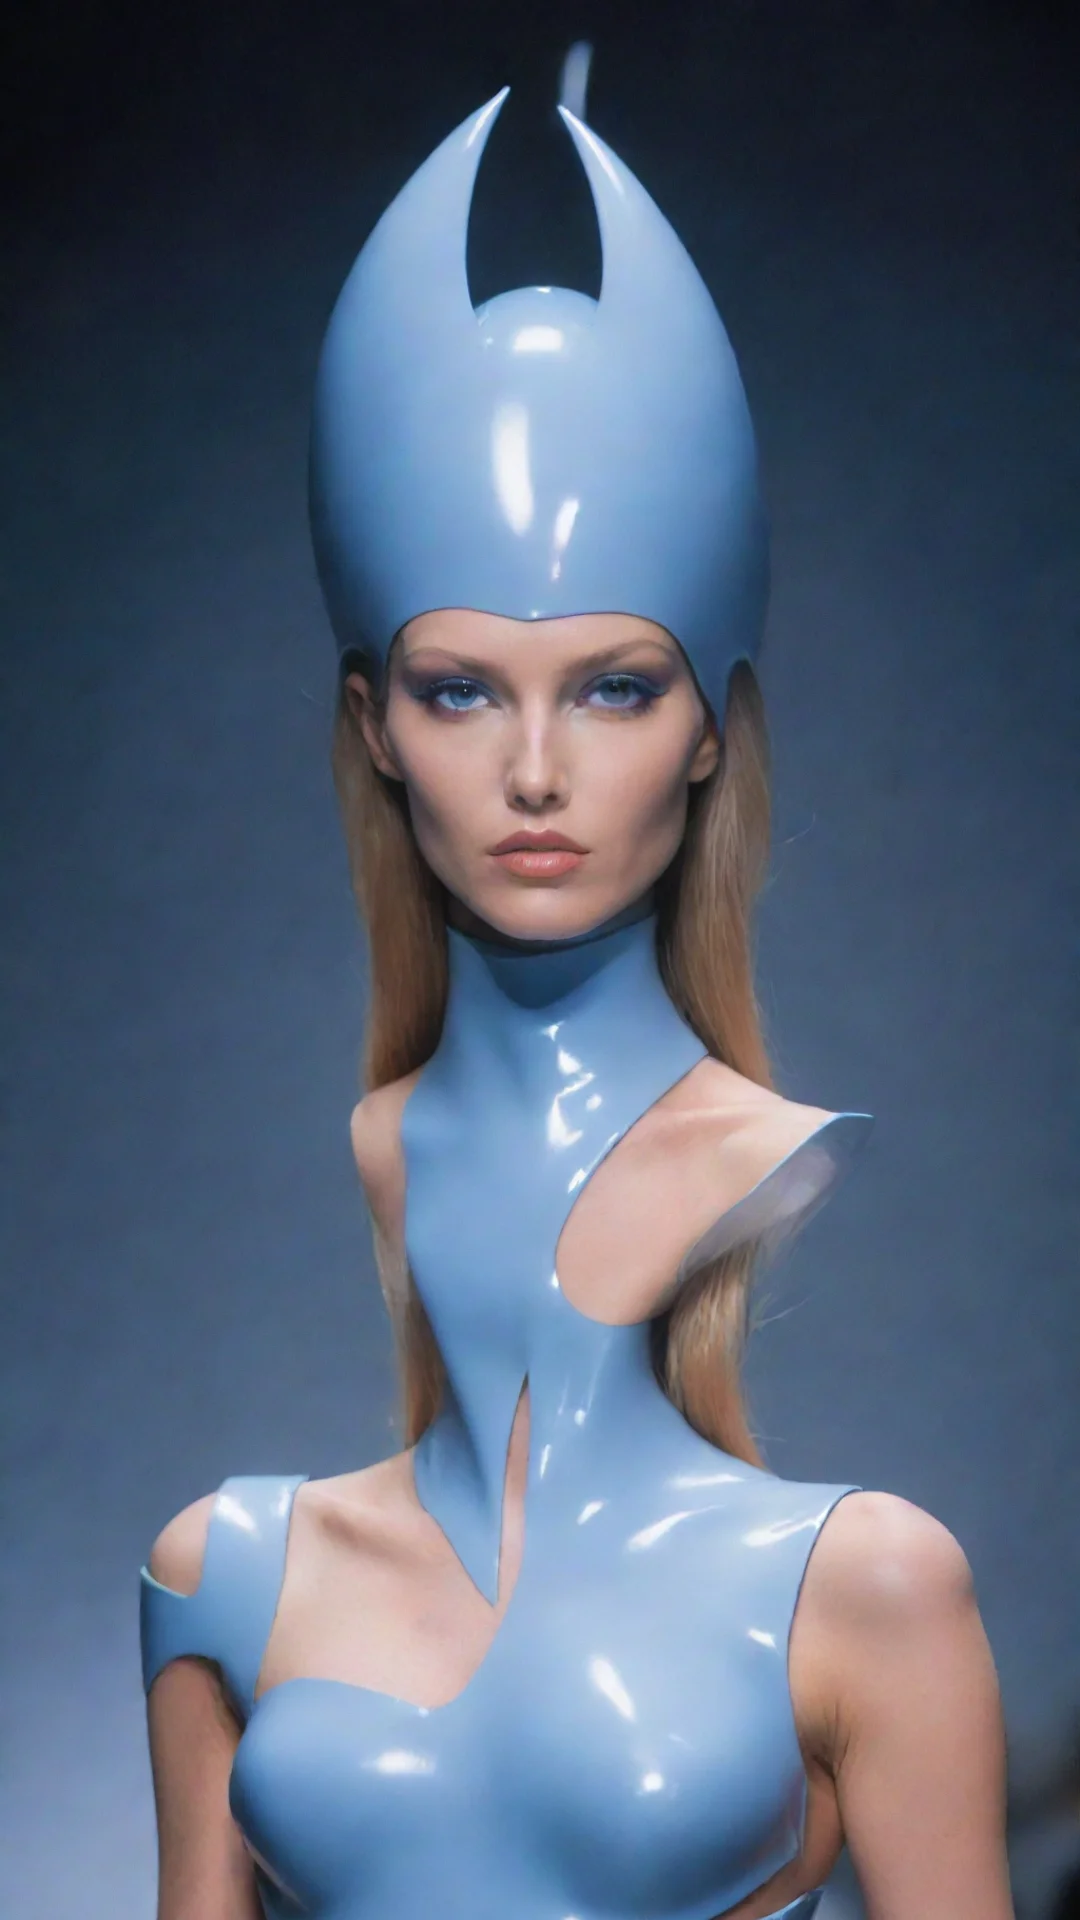 amazing thierry mugler fashion style futuristic model awesome portrait 2 tall